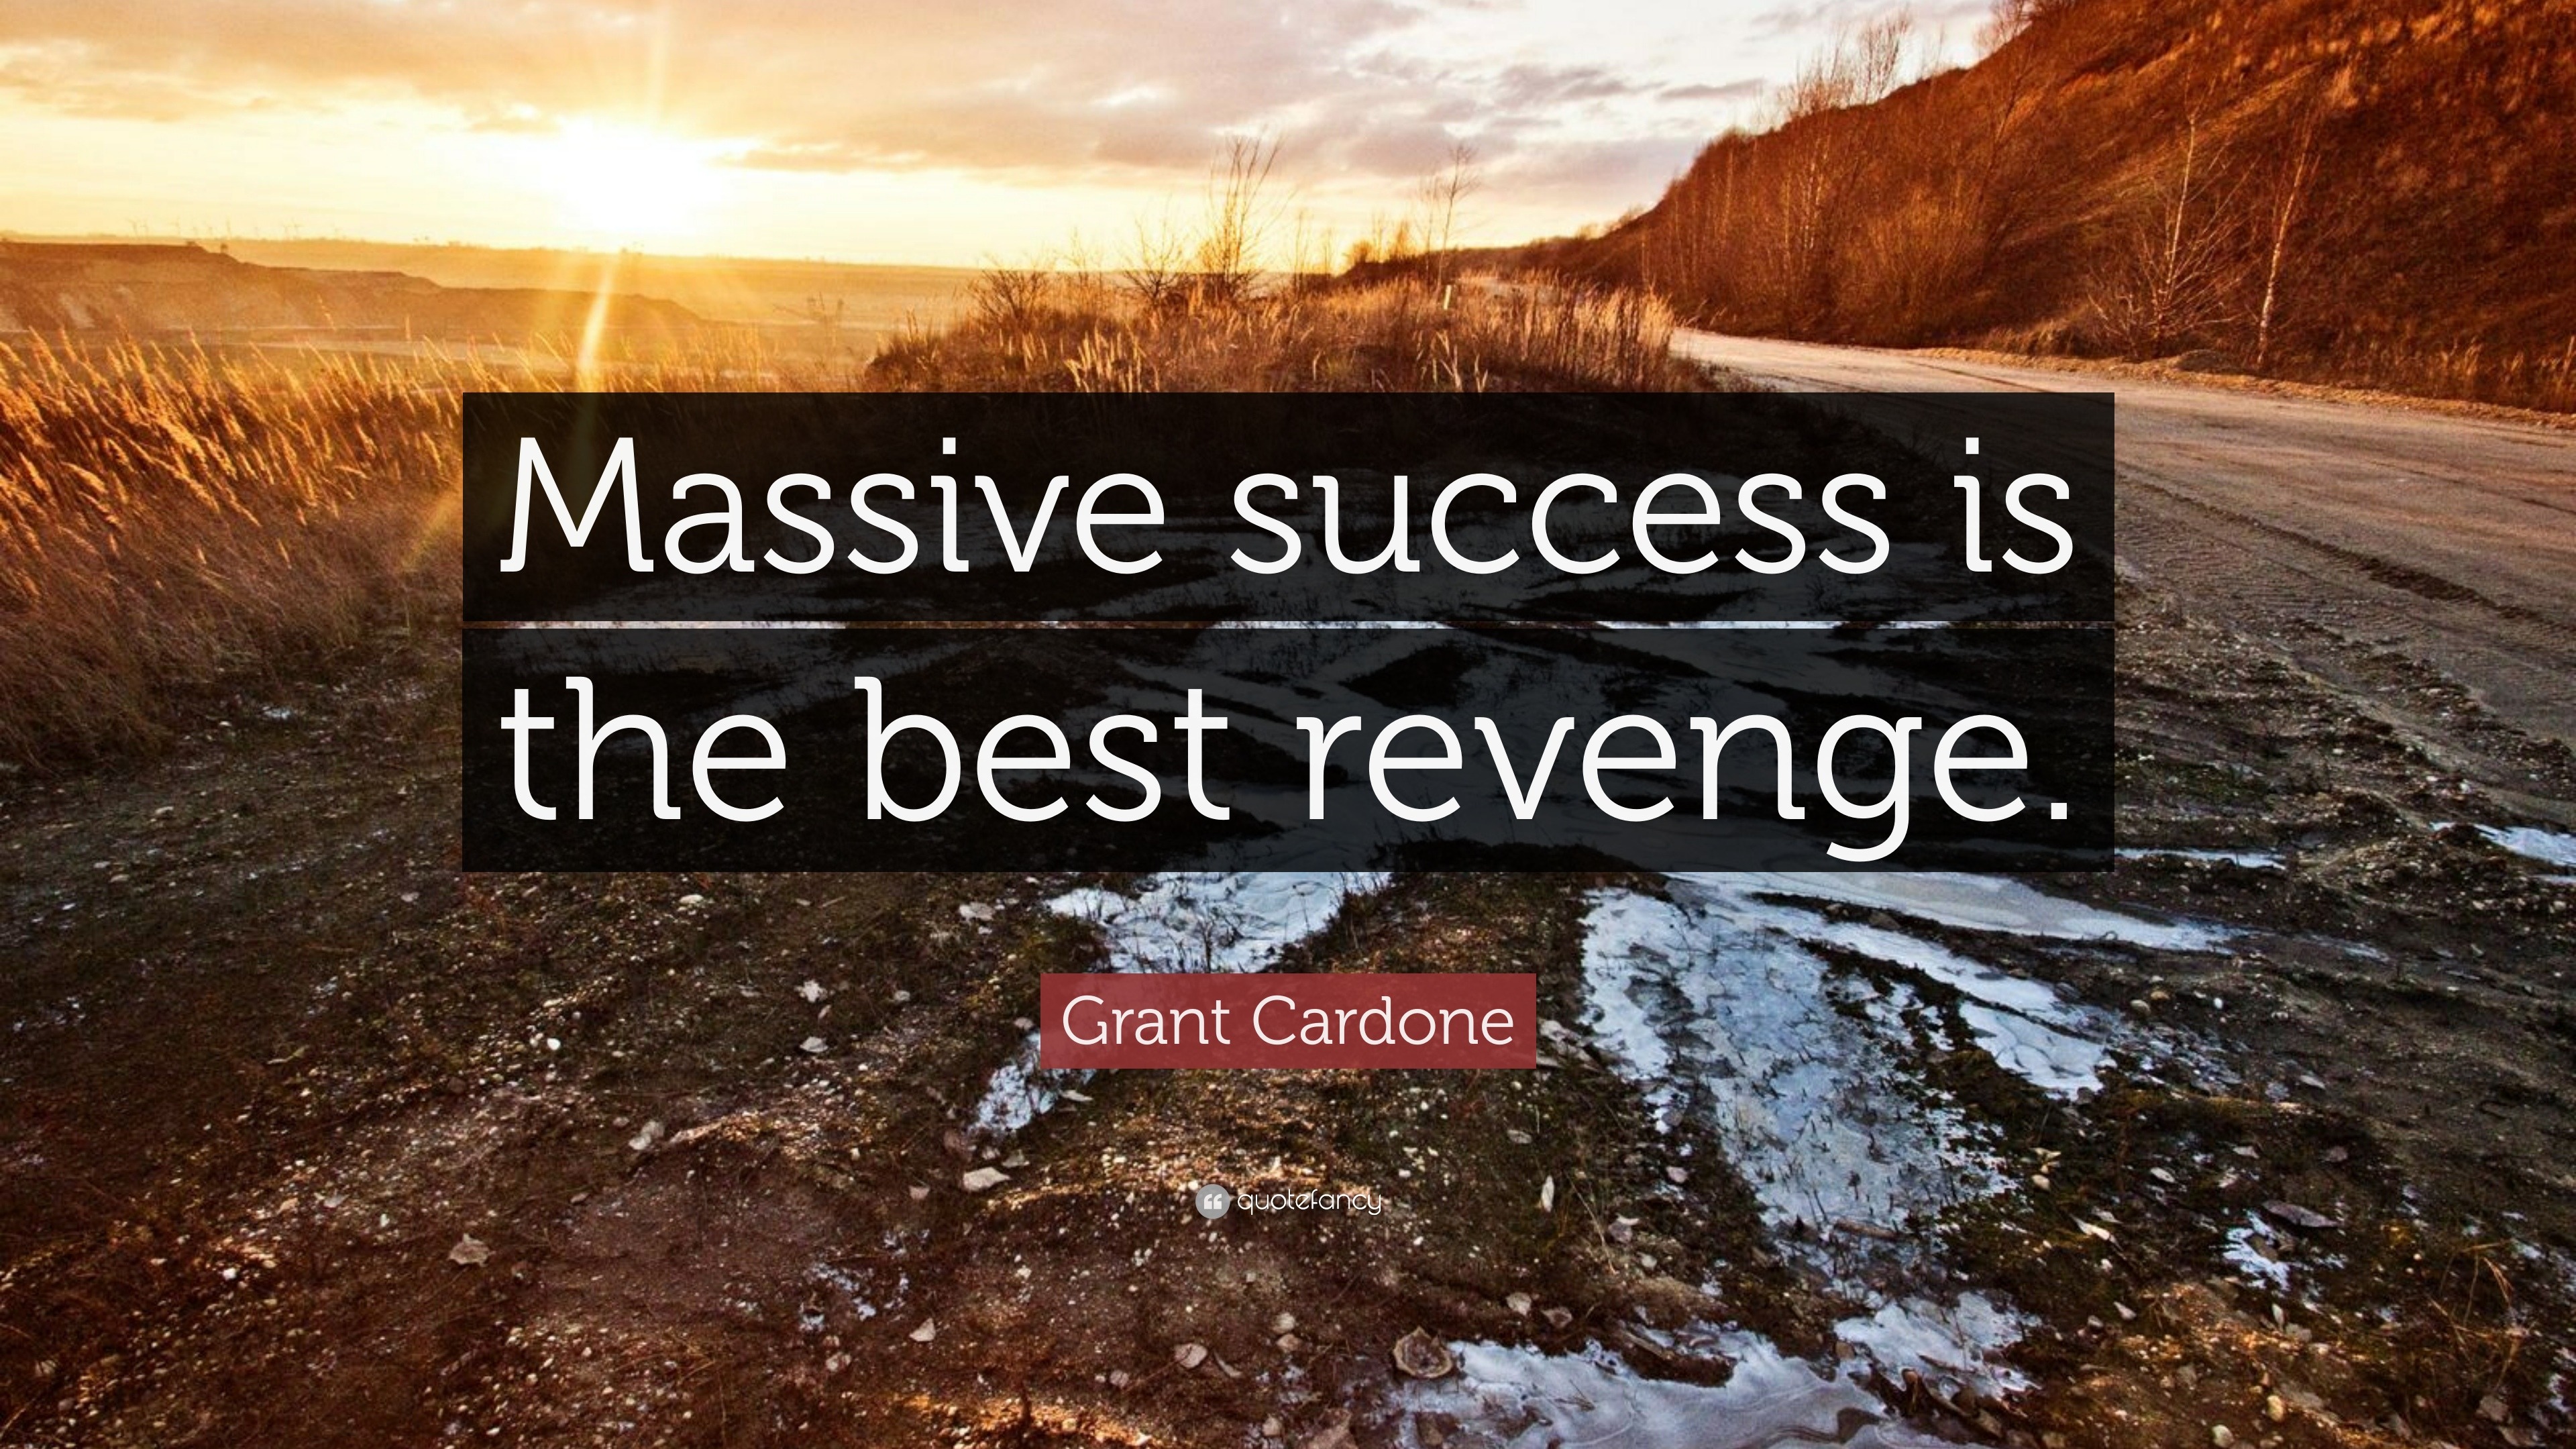 Grant Cardone Quote “Massive success is the best revenge.”